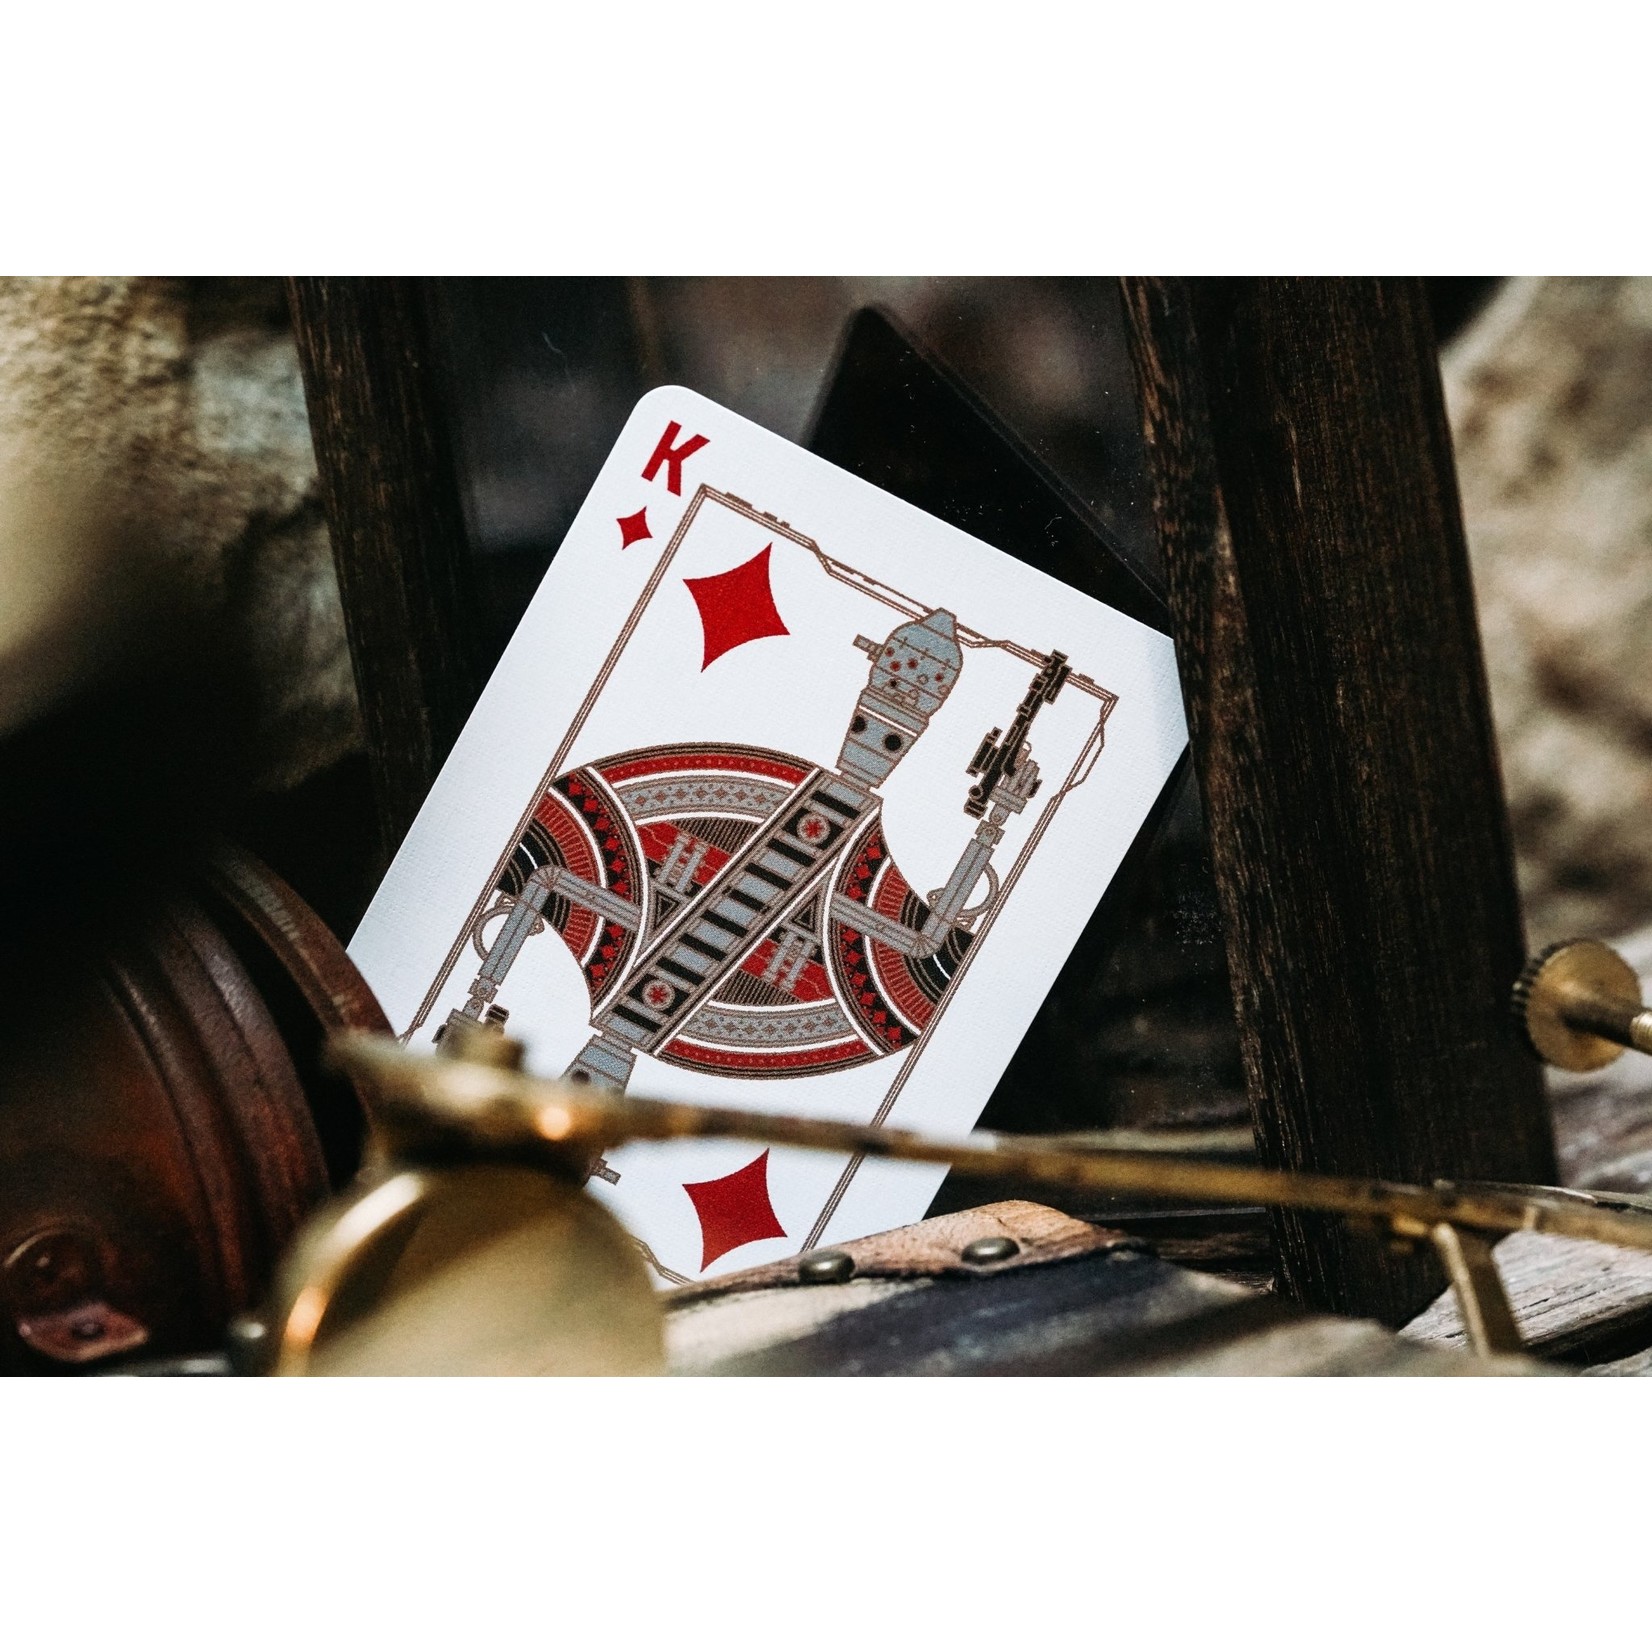 theory11 Premium Playing Cards: Mandalorian